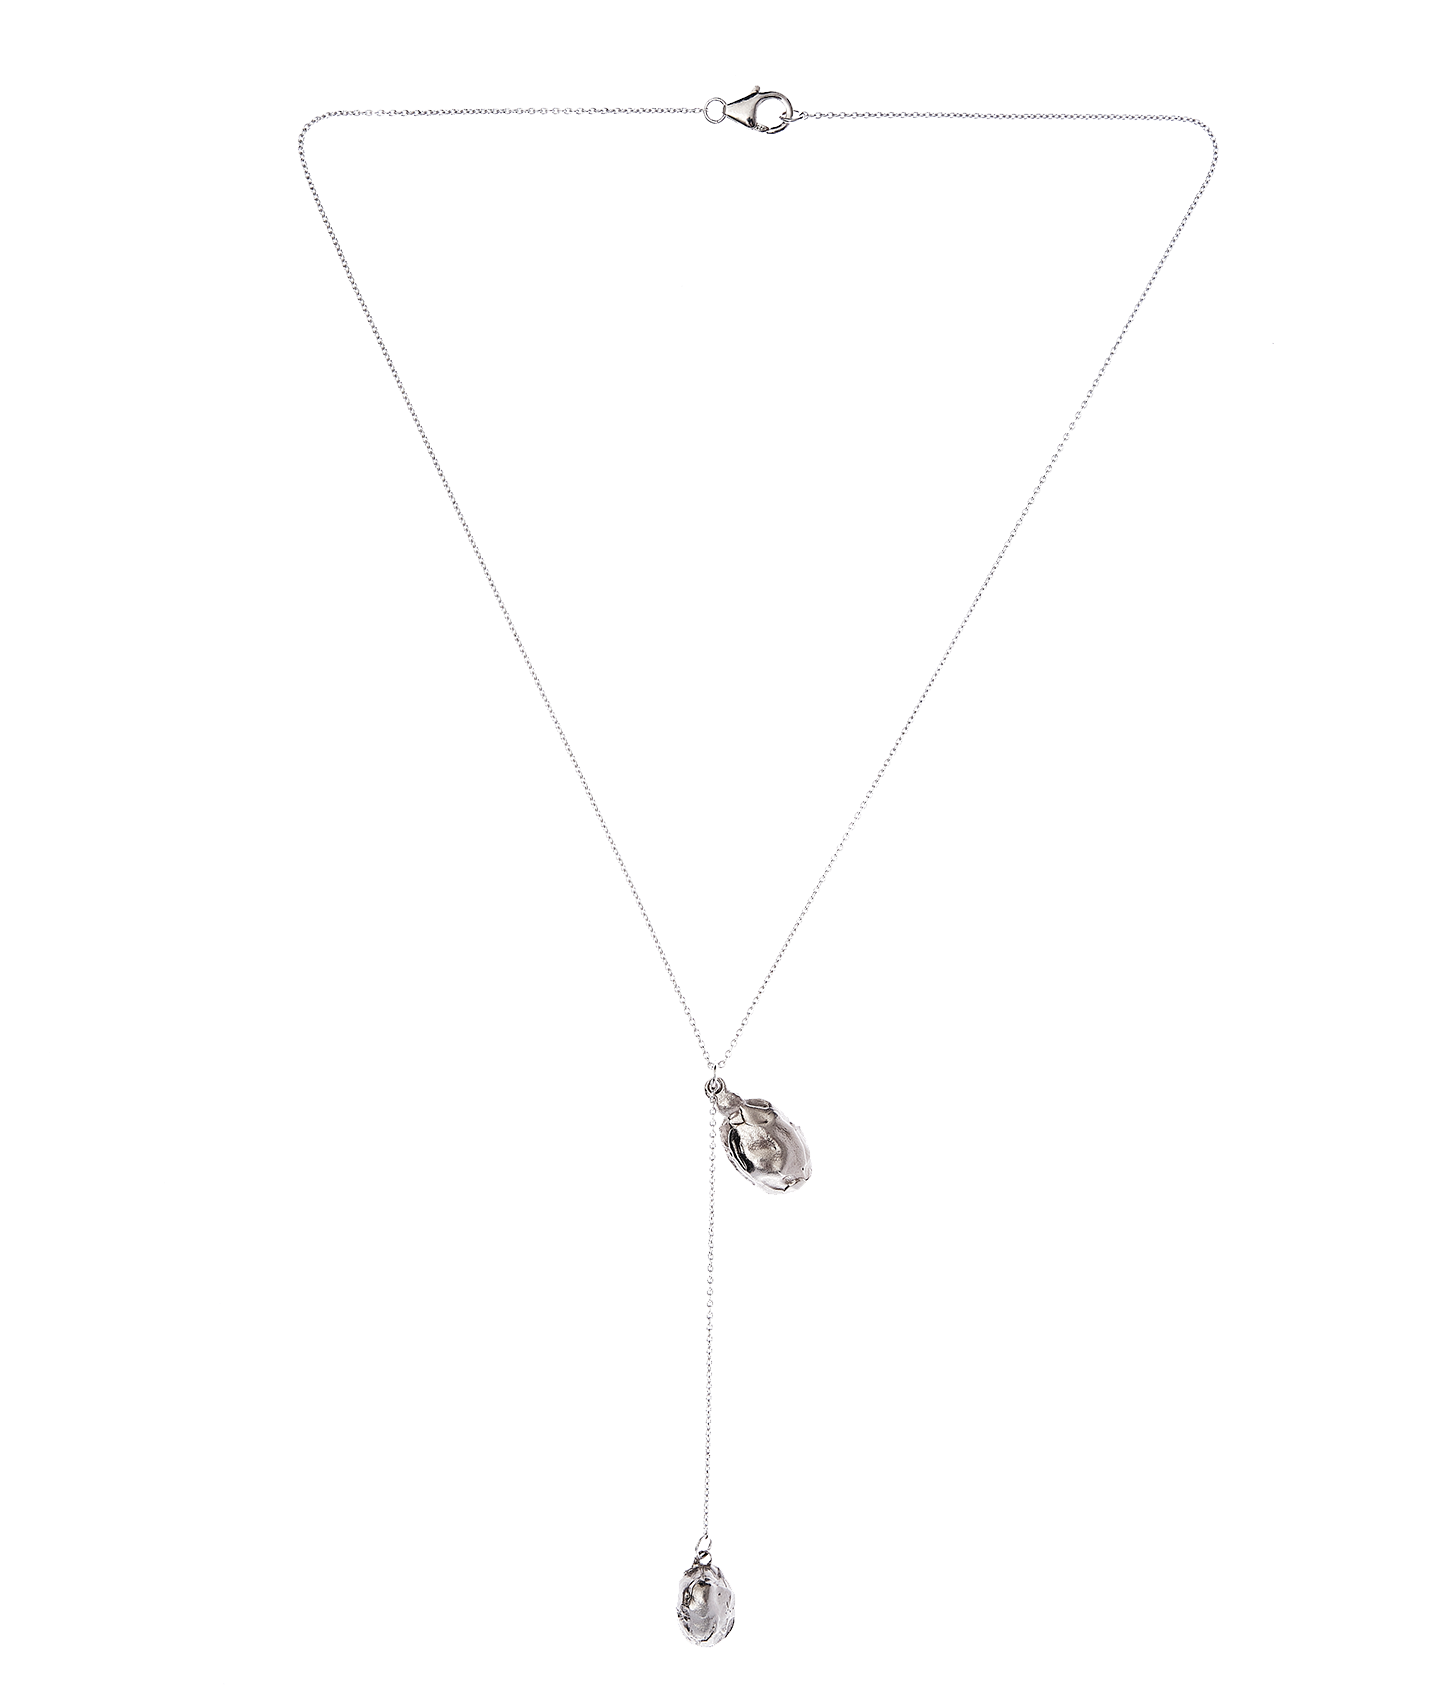 The Lunar Rocks Necklace